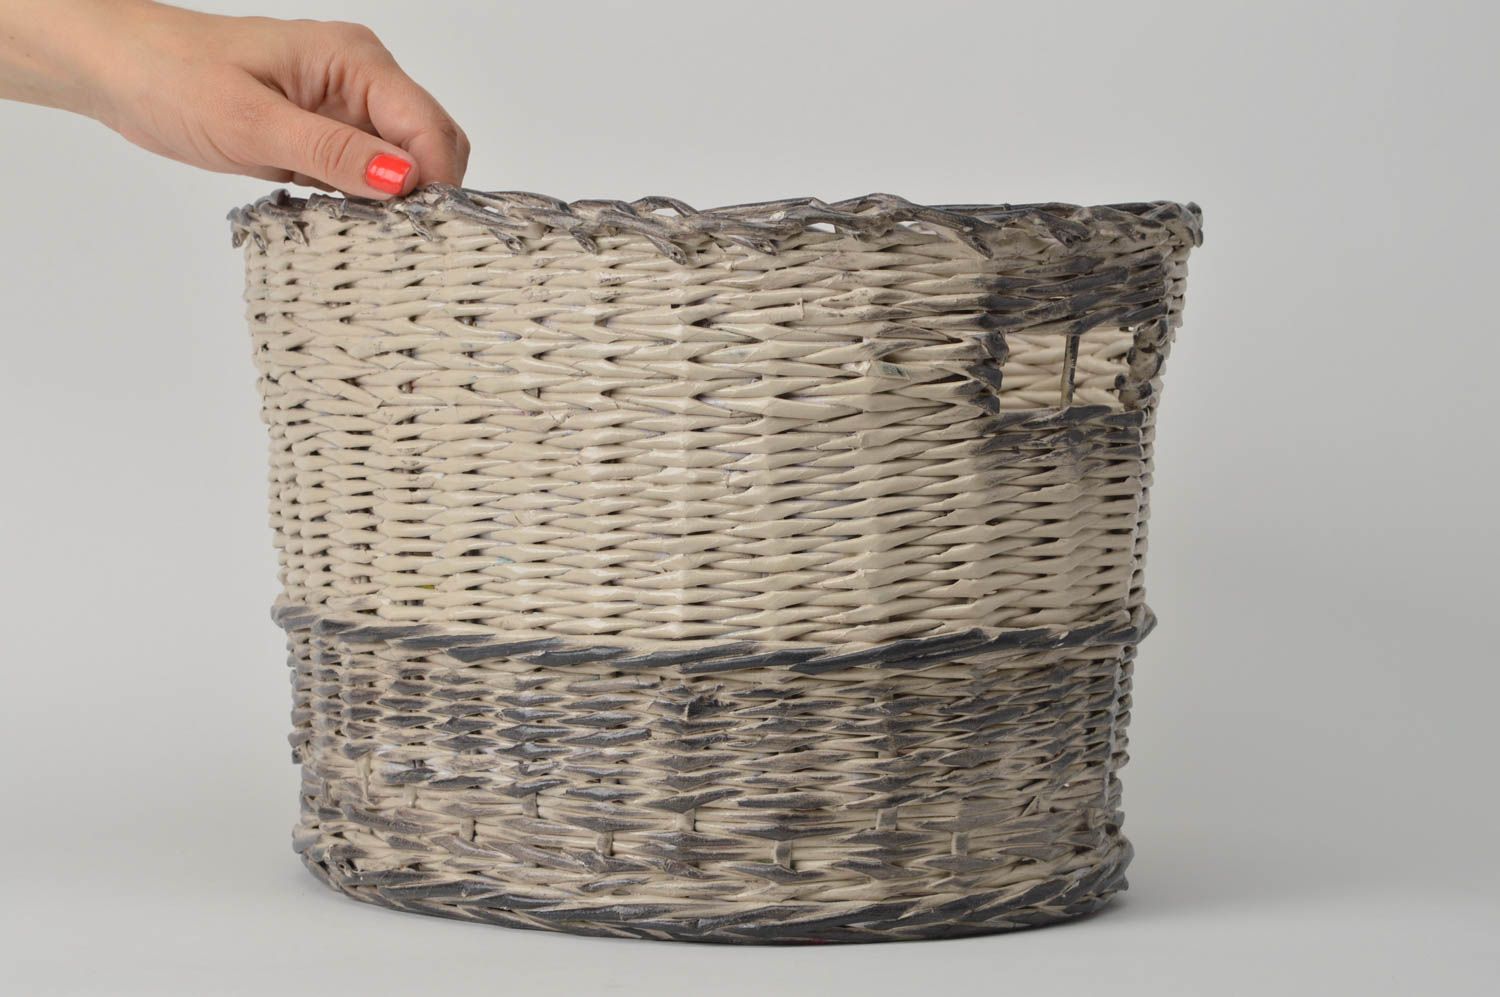 Decoupage ideas handmade woven basket stylish interior decor present basket photo 1